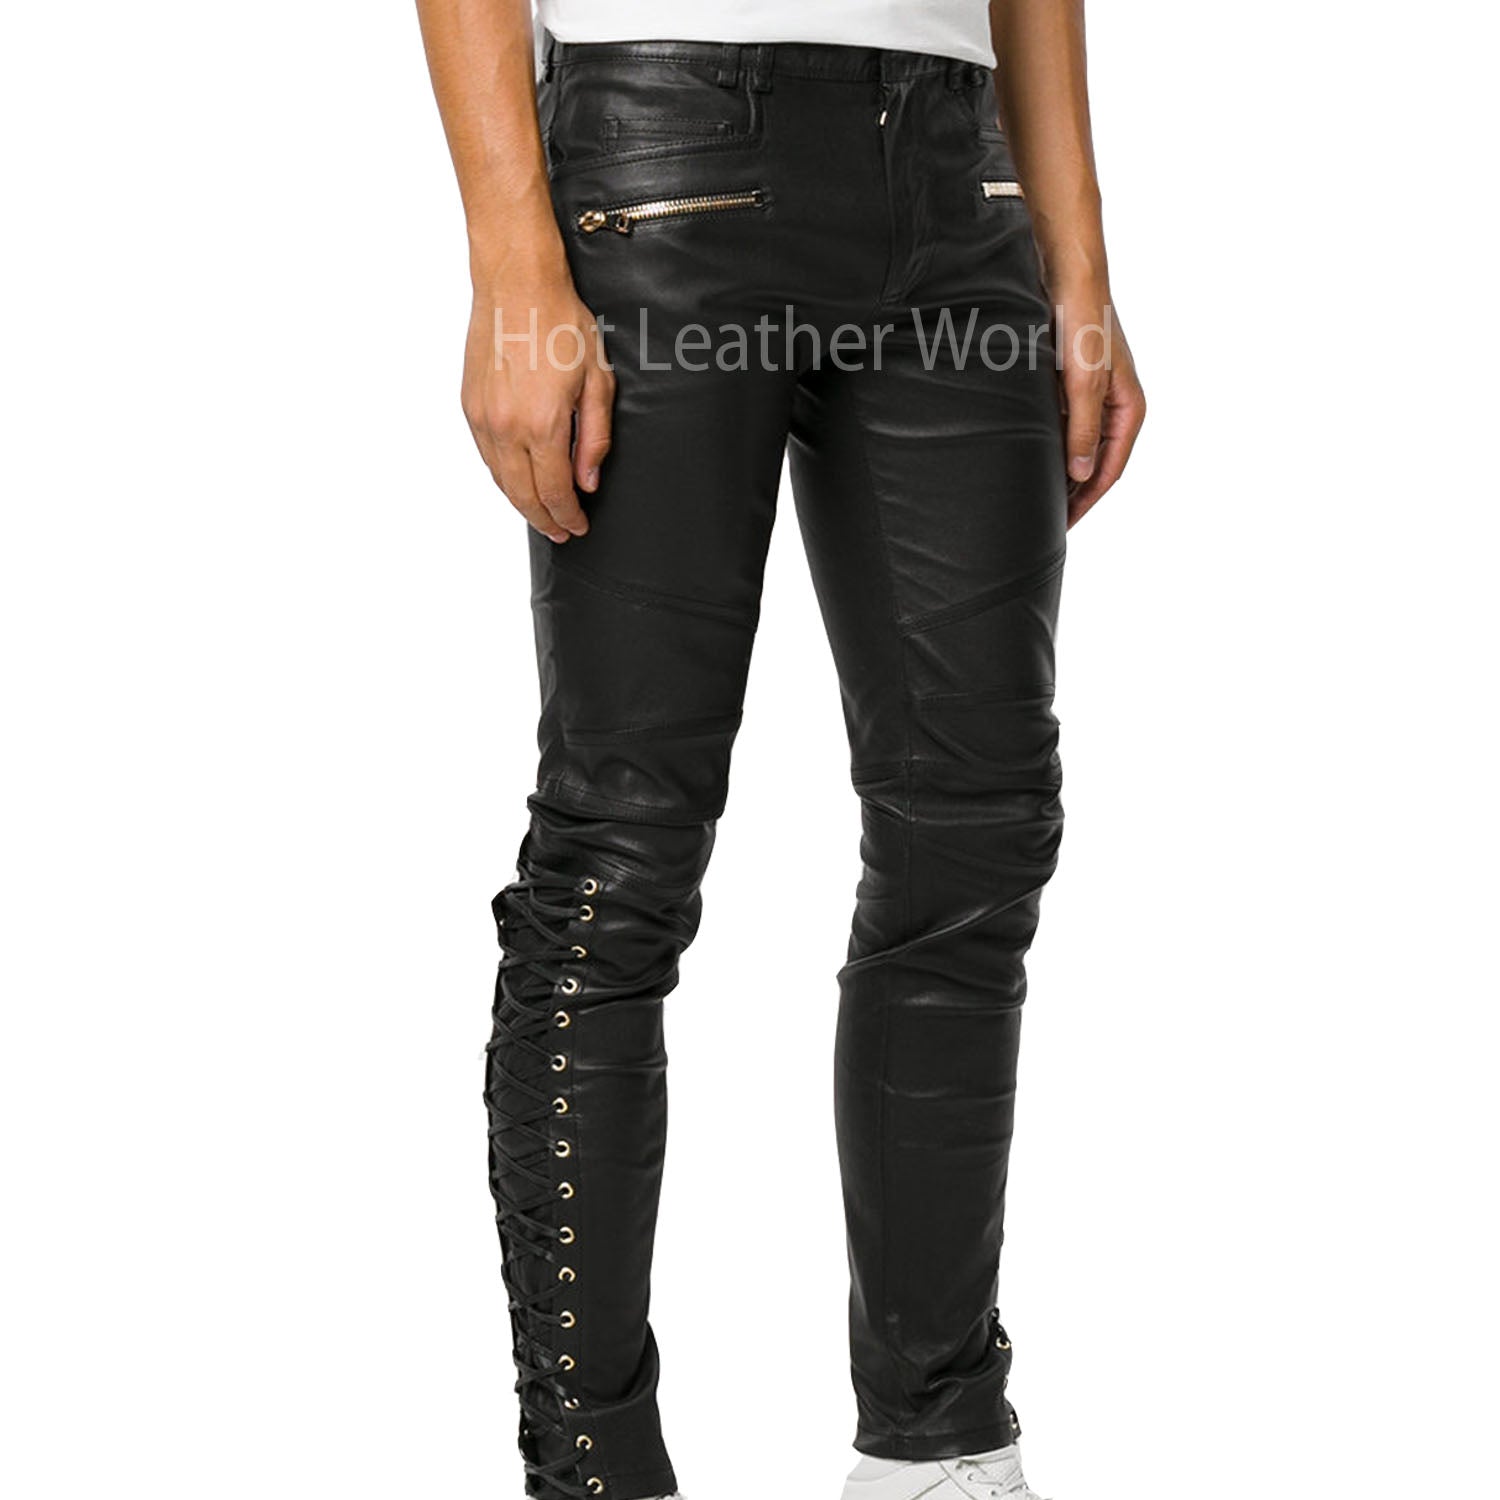 Trendy Men Leather Pant -  HOTLEATHERWORLD